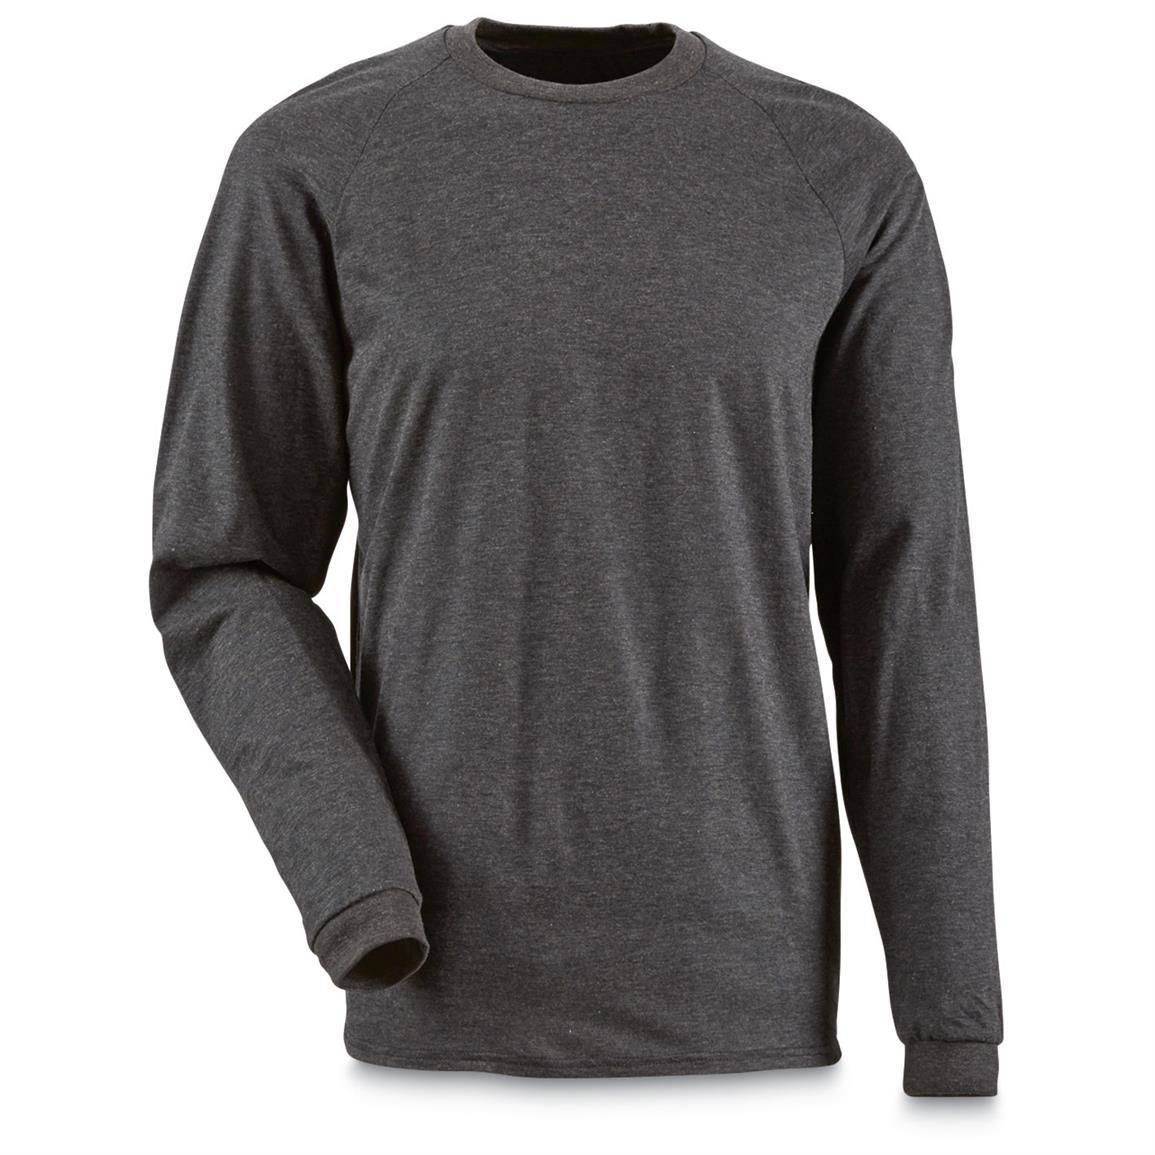 U.S. Military Issue Potomac Base Layer Long Sleeve Shirts, New - 651651 ...